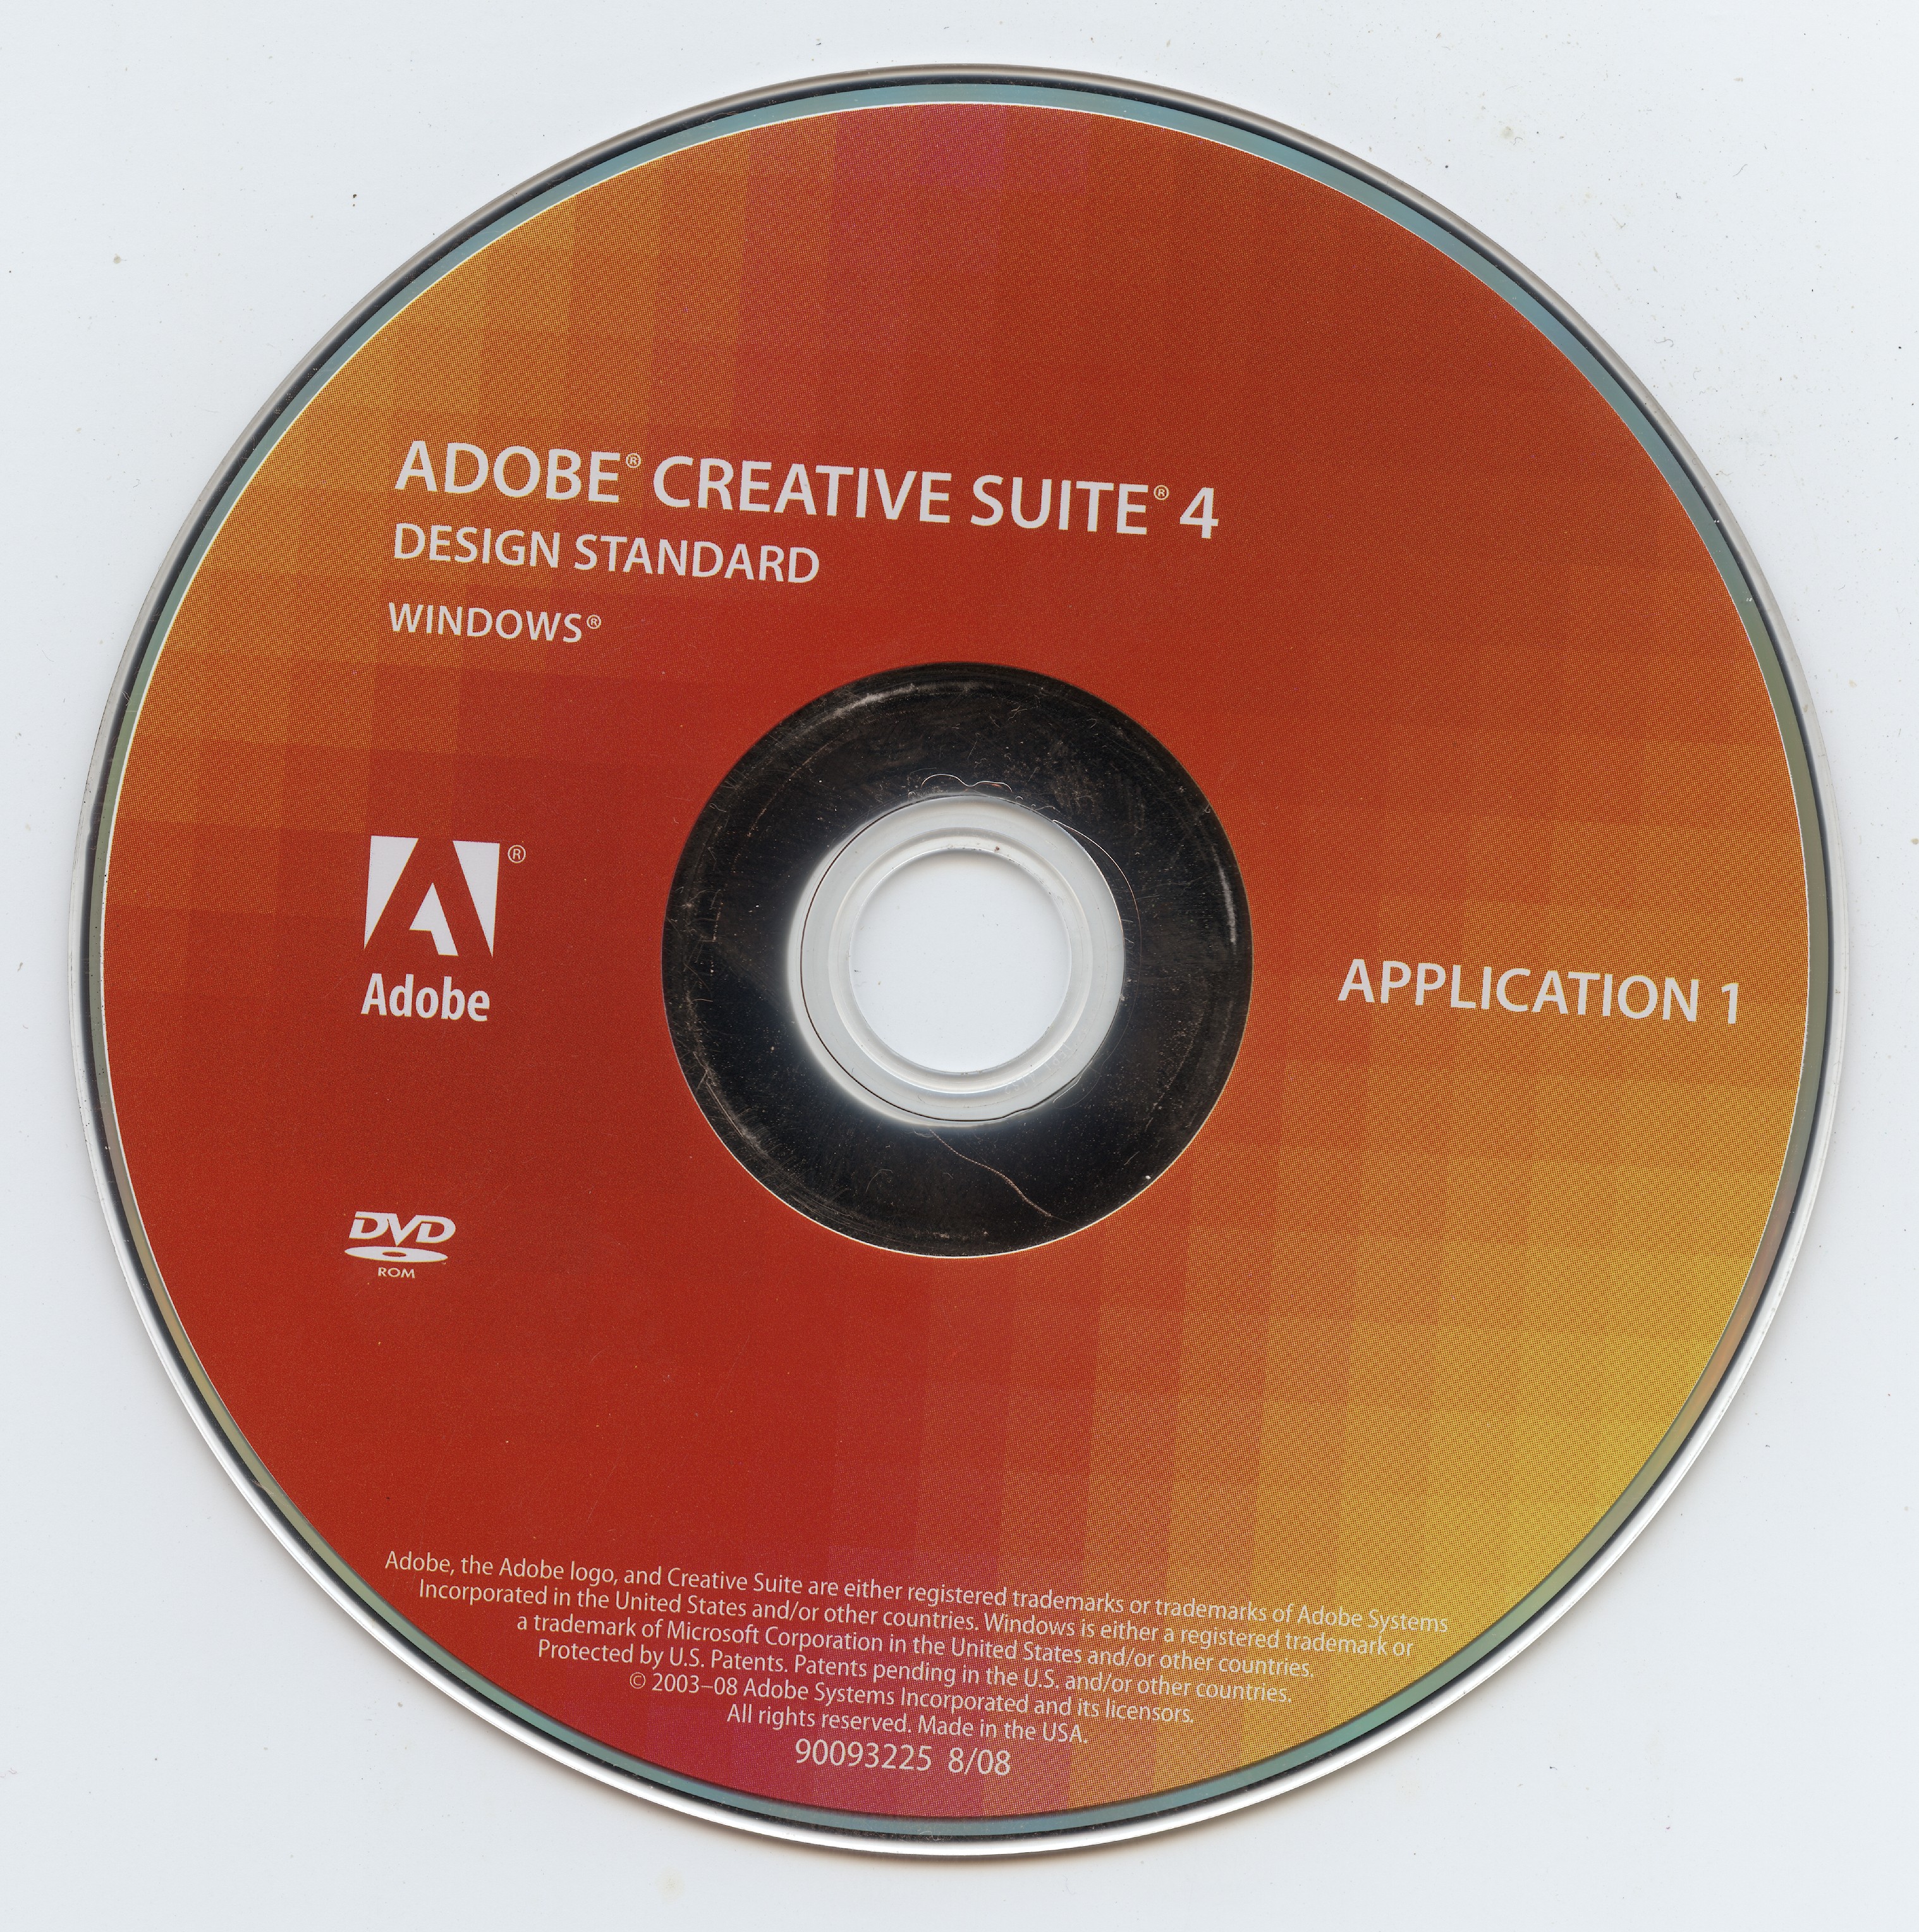 Adobe Creative Suite 4 Design Standard Windows (Application 1 